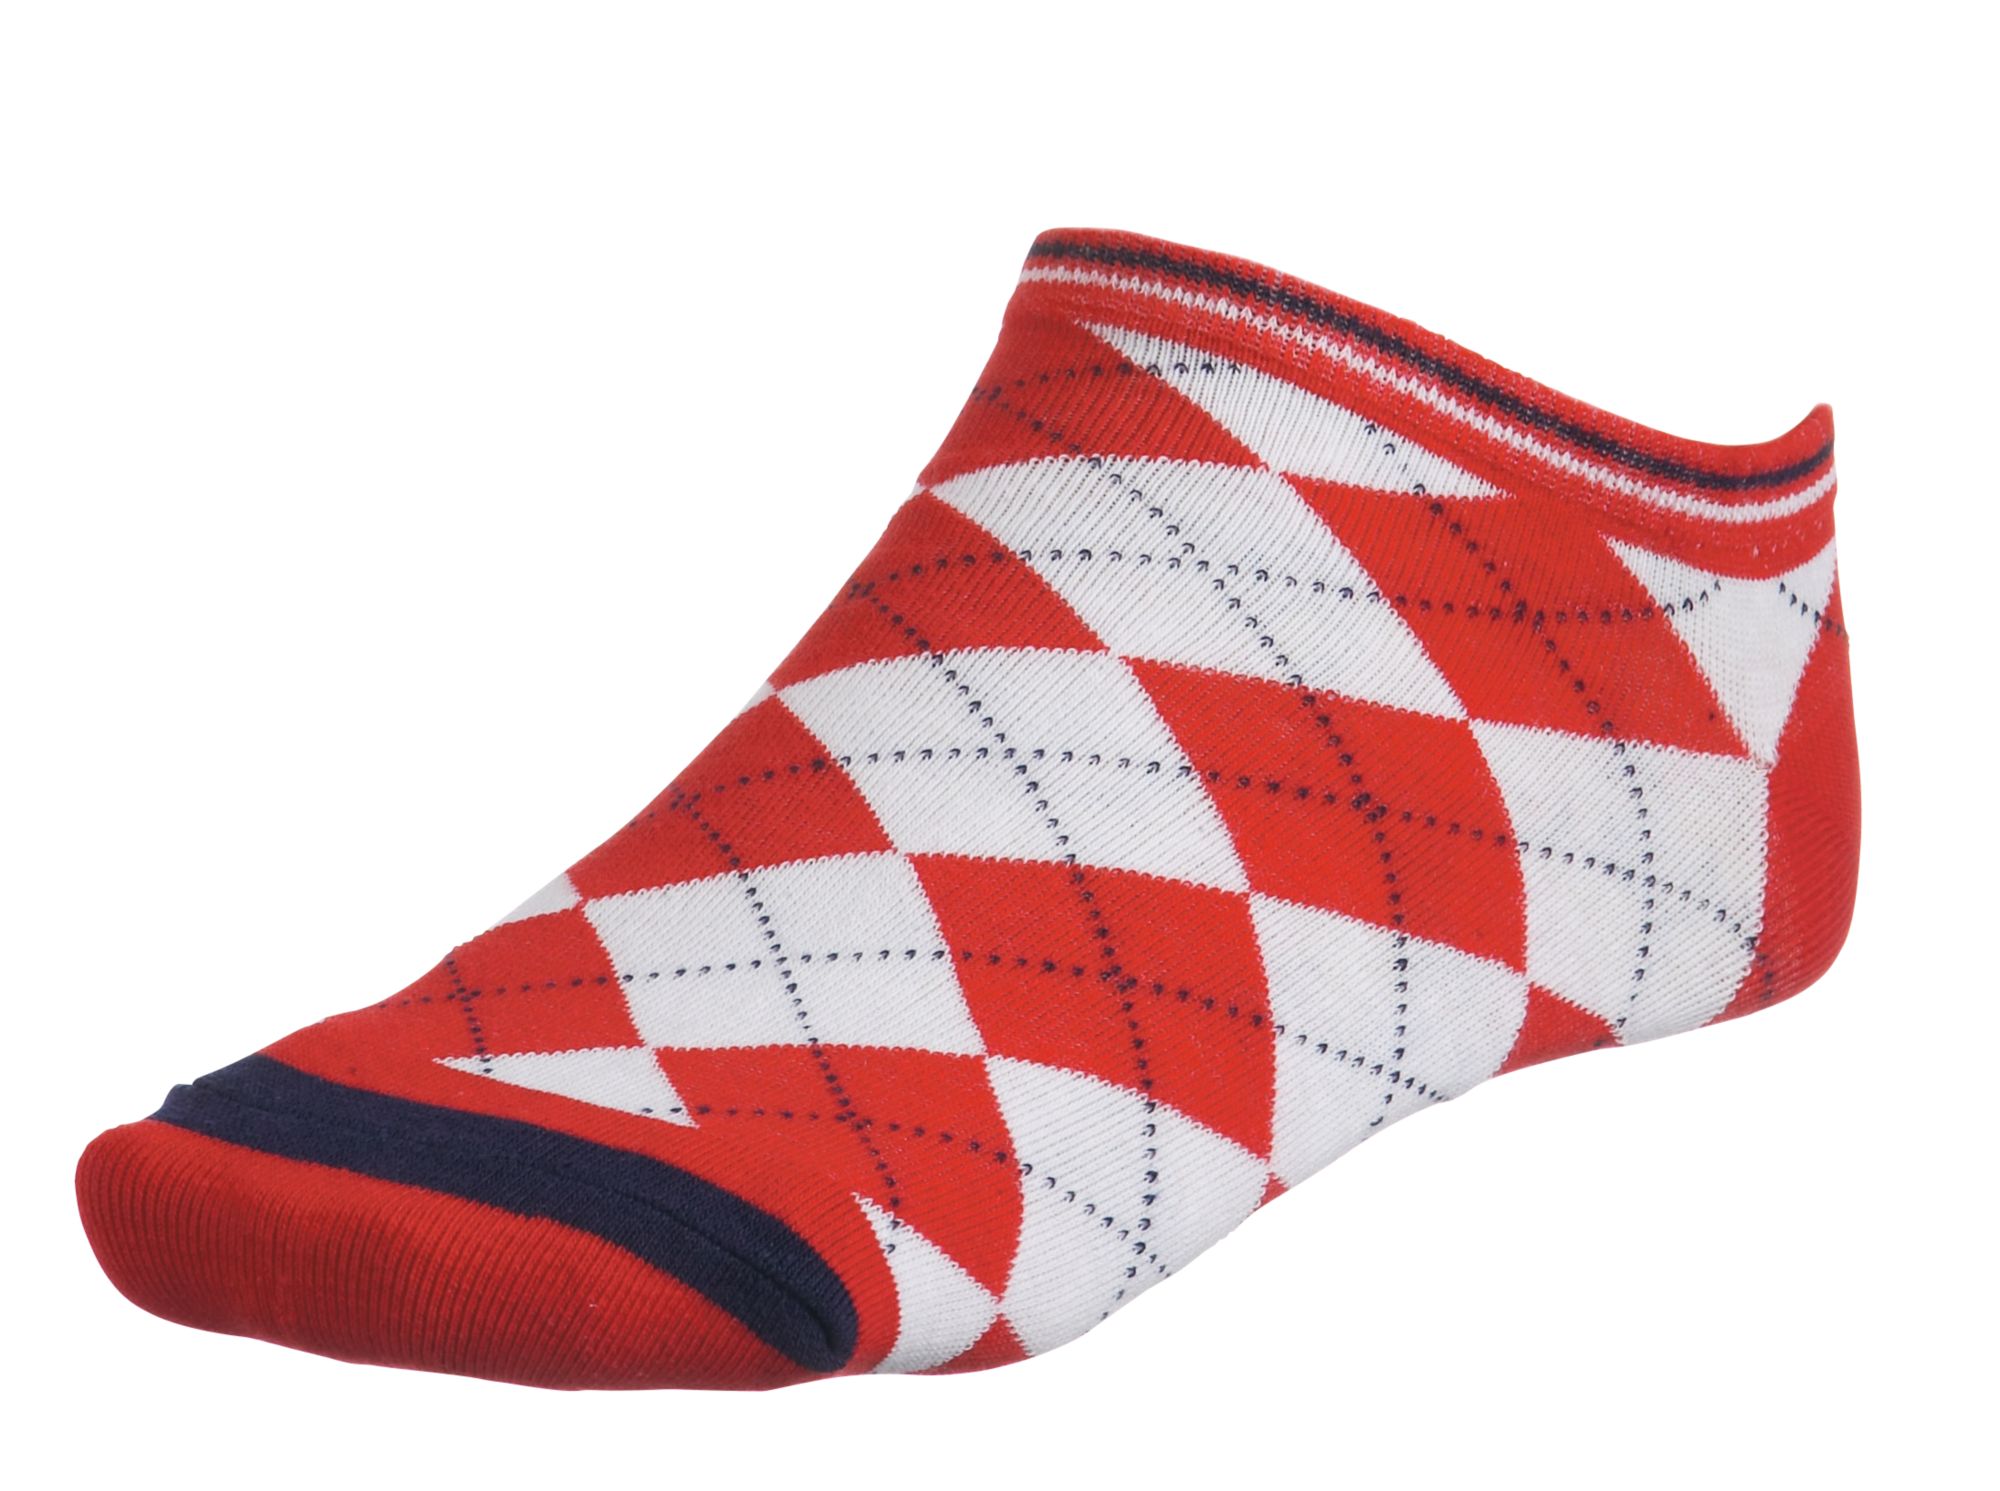 Footjoy Sale on Footjoy Women S Argyle Comfortsof Socks Price   5 99 Usd Sale Price 5